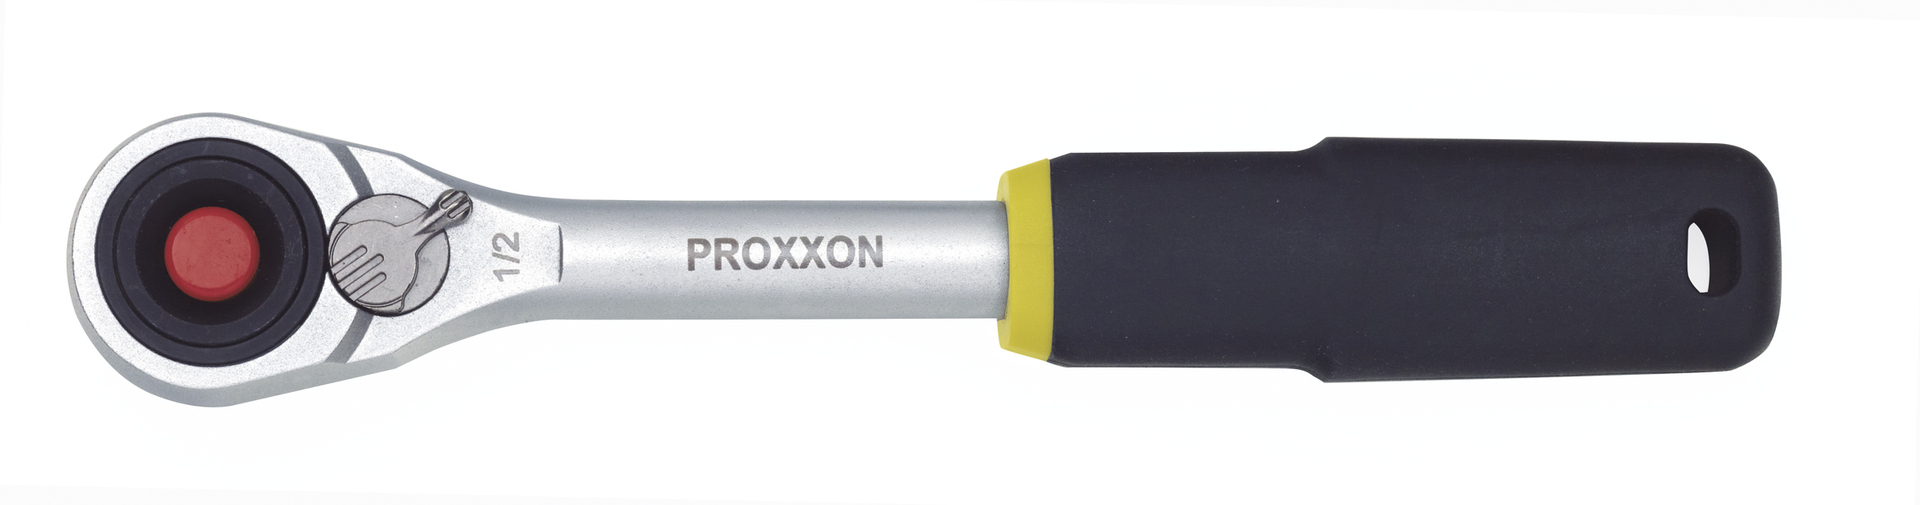 PROXXON GmbH Micro – Ratsche 1/4 Zoll